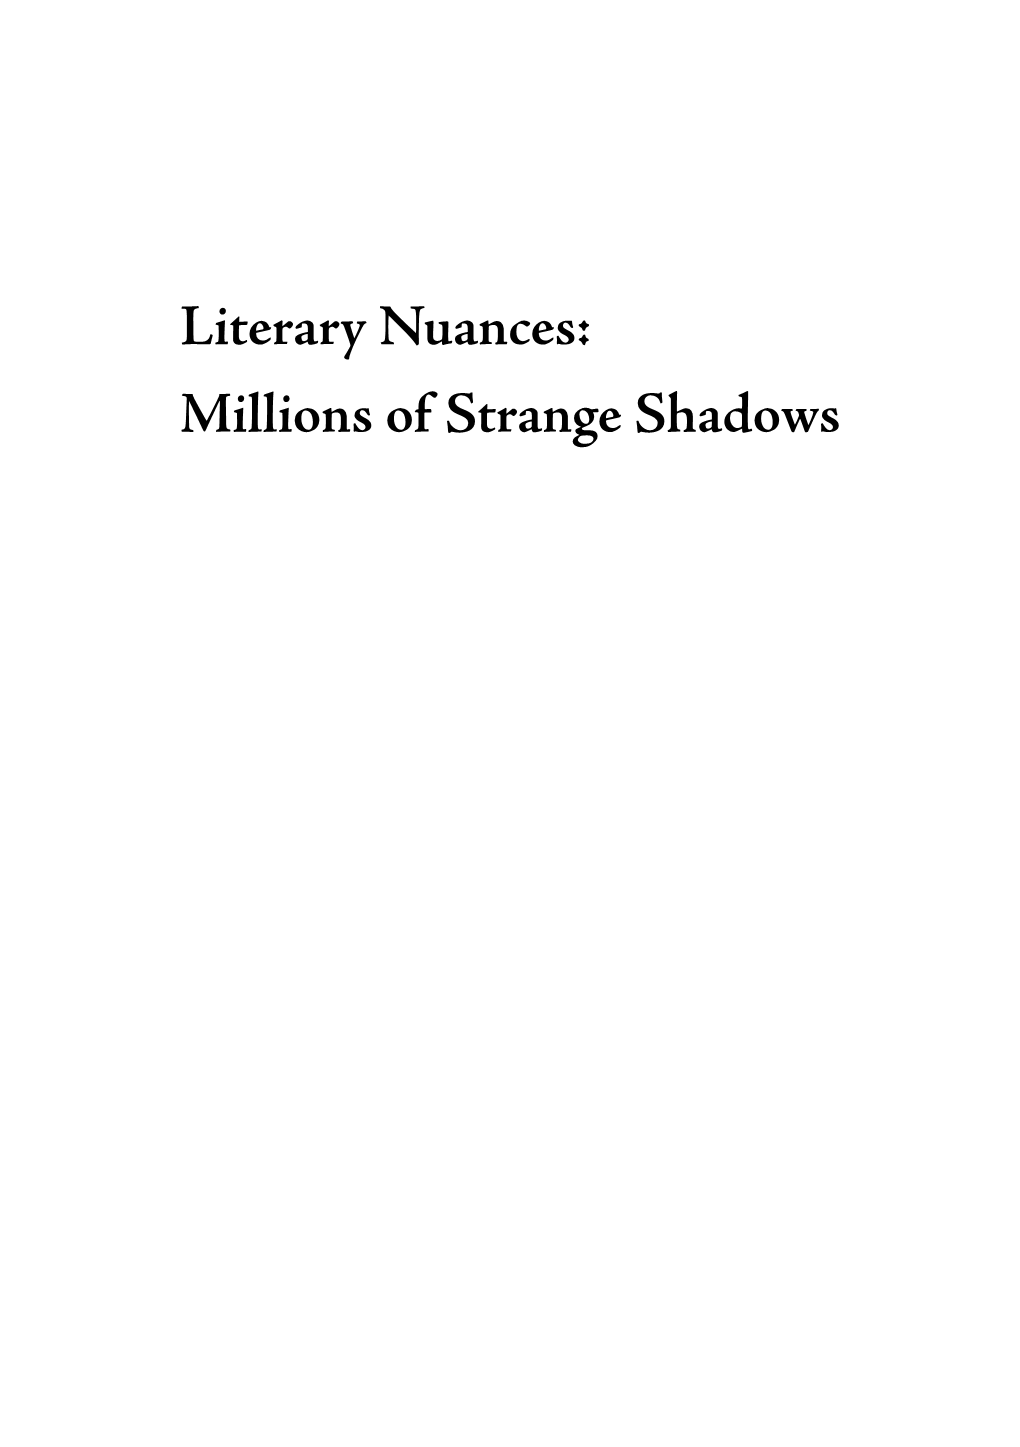 Literary Nuances: Millions of Strange Shadows